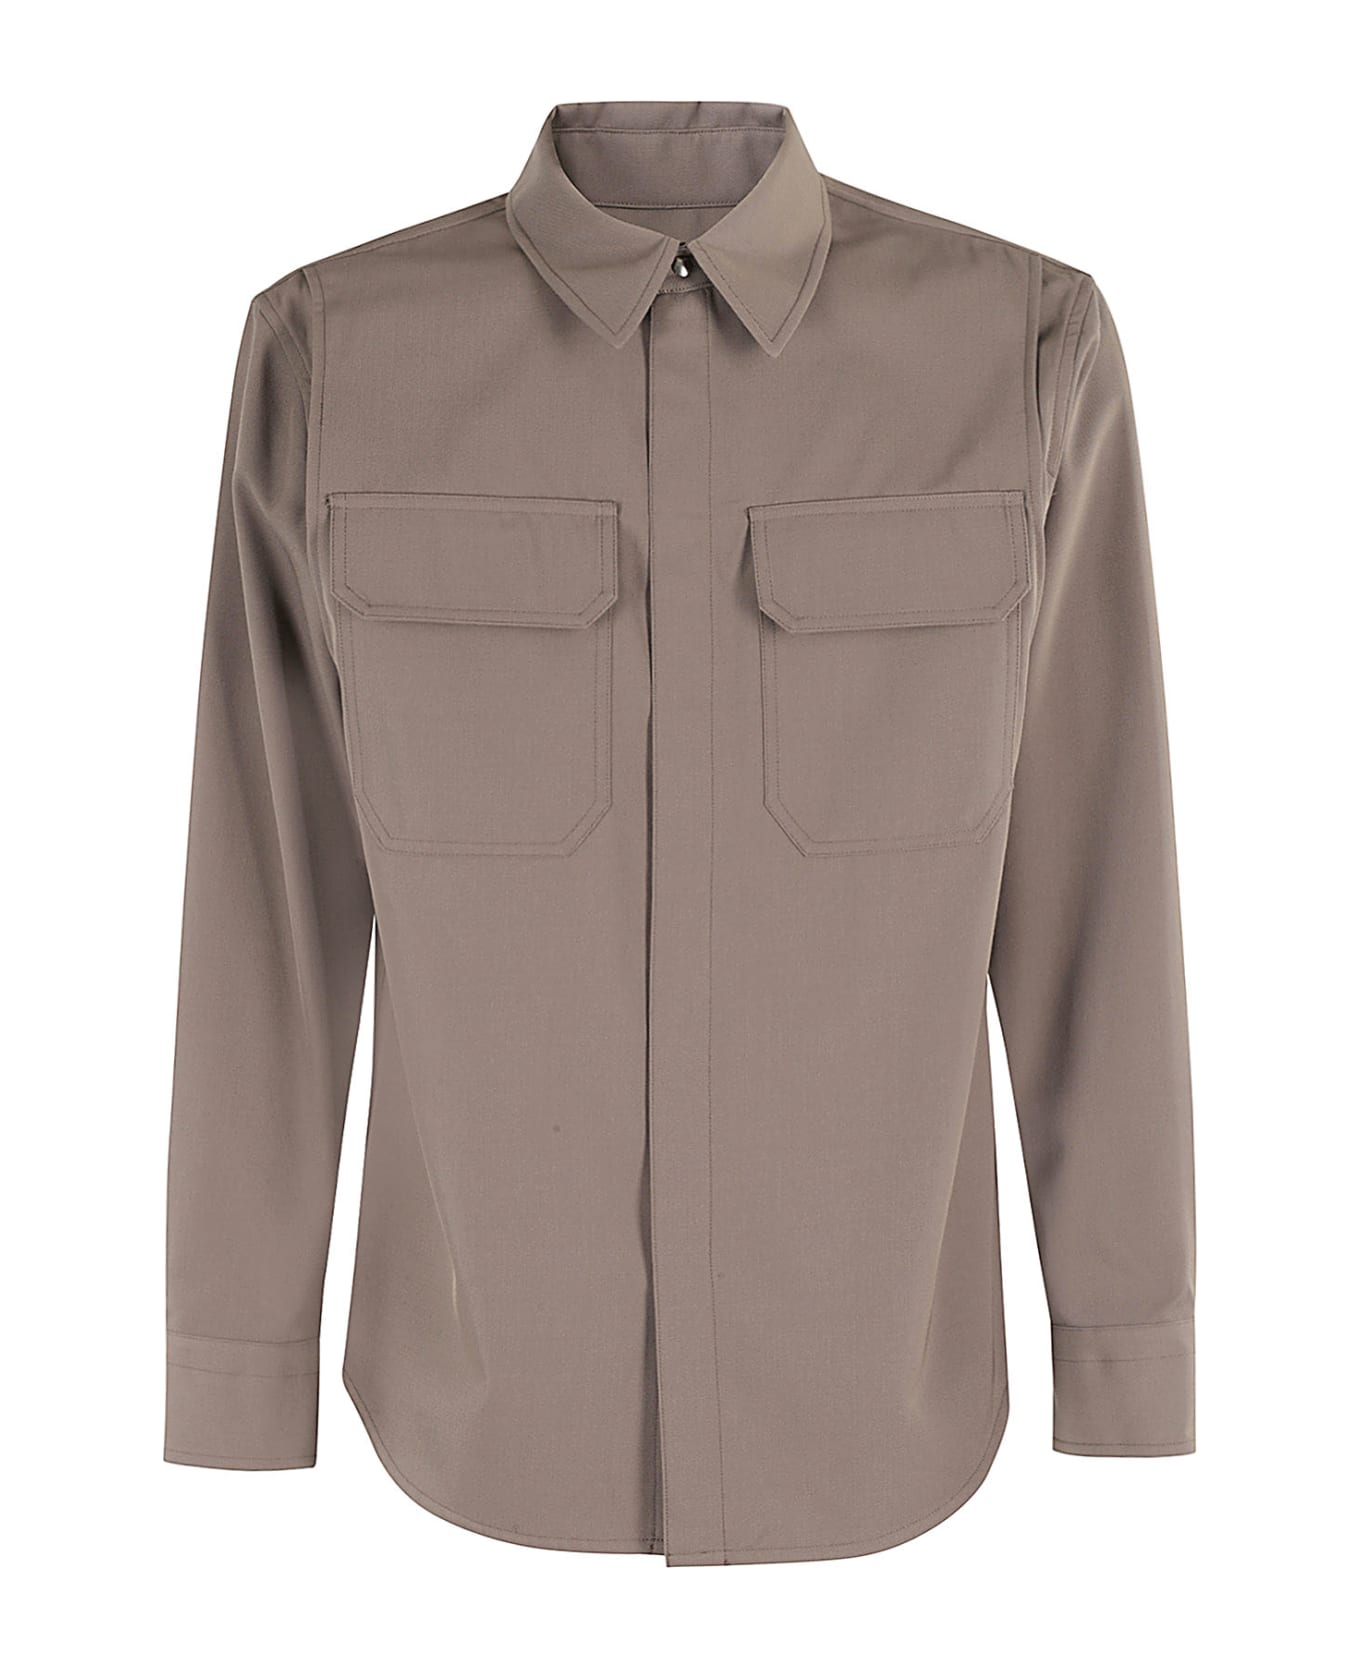 Helmut Lang Military Shirt - Cobblestone